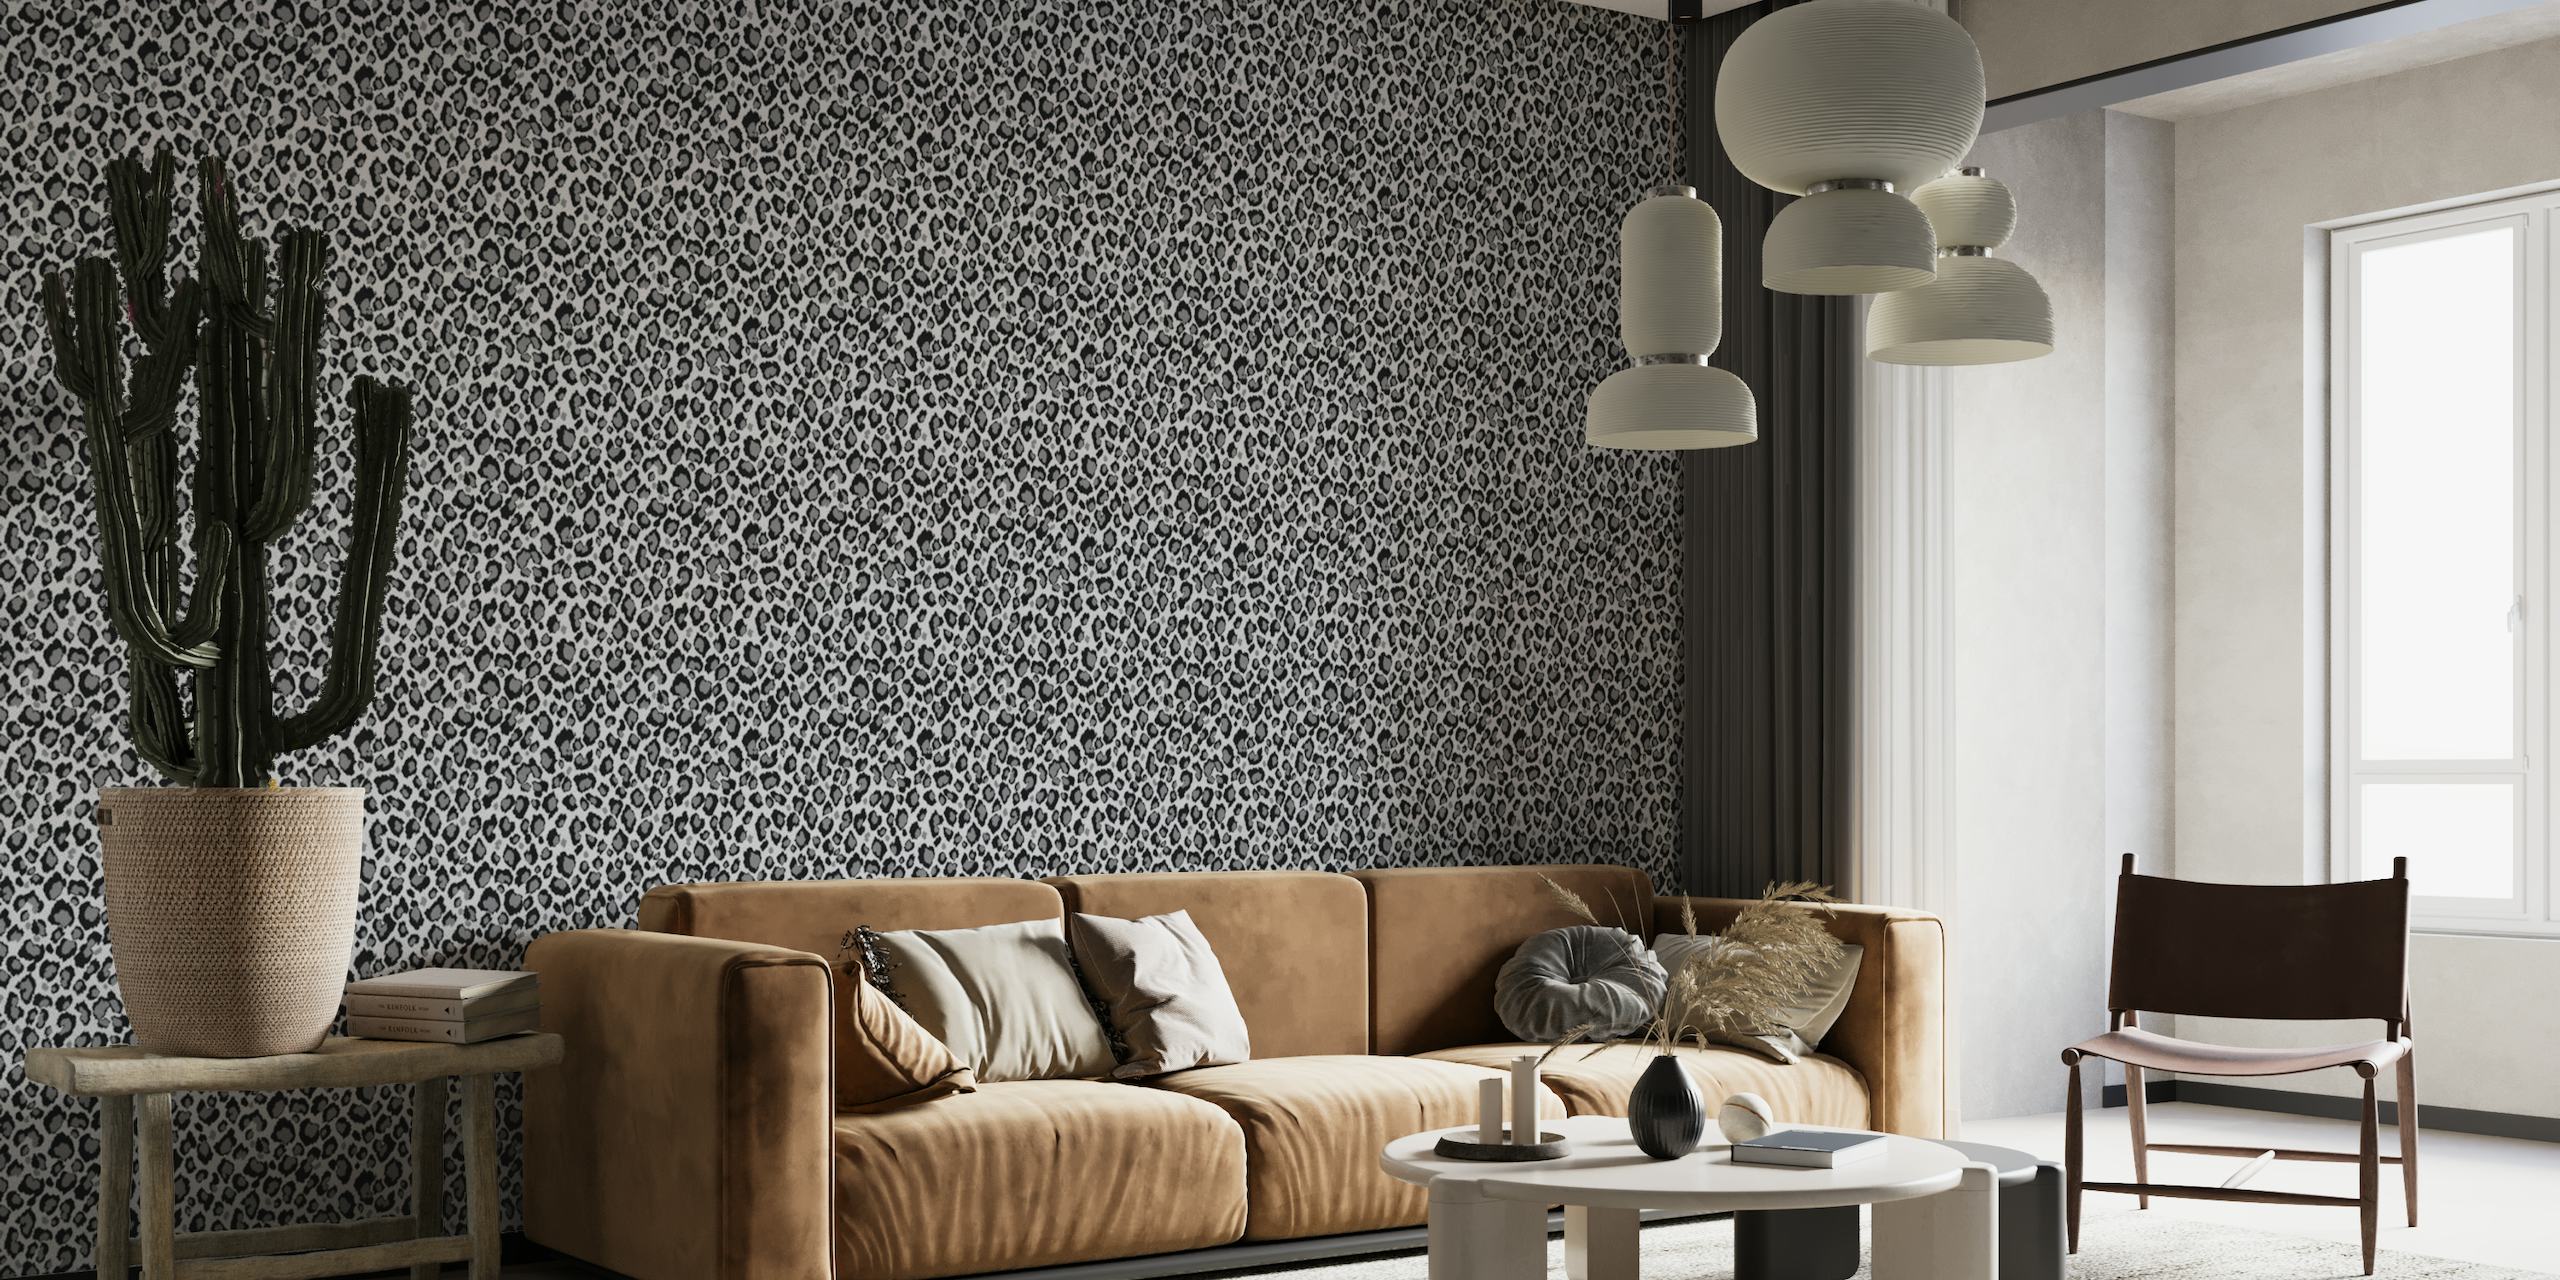 Fototapeta s leopardím vzorem v šedé a černé barvě pro sofistikovanou výzdobu interiéru.